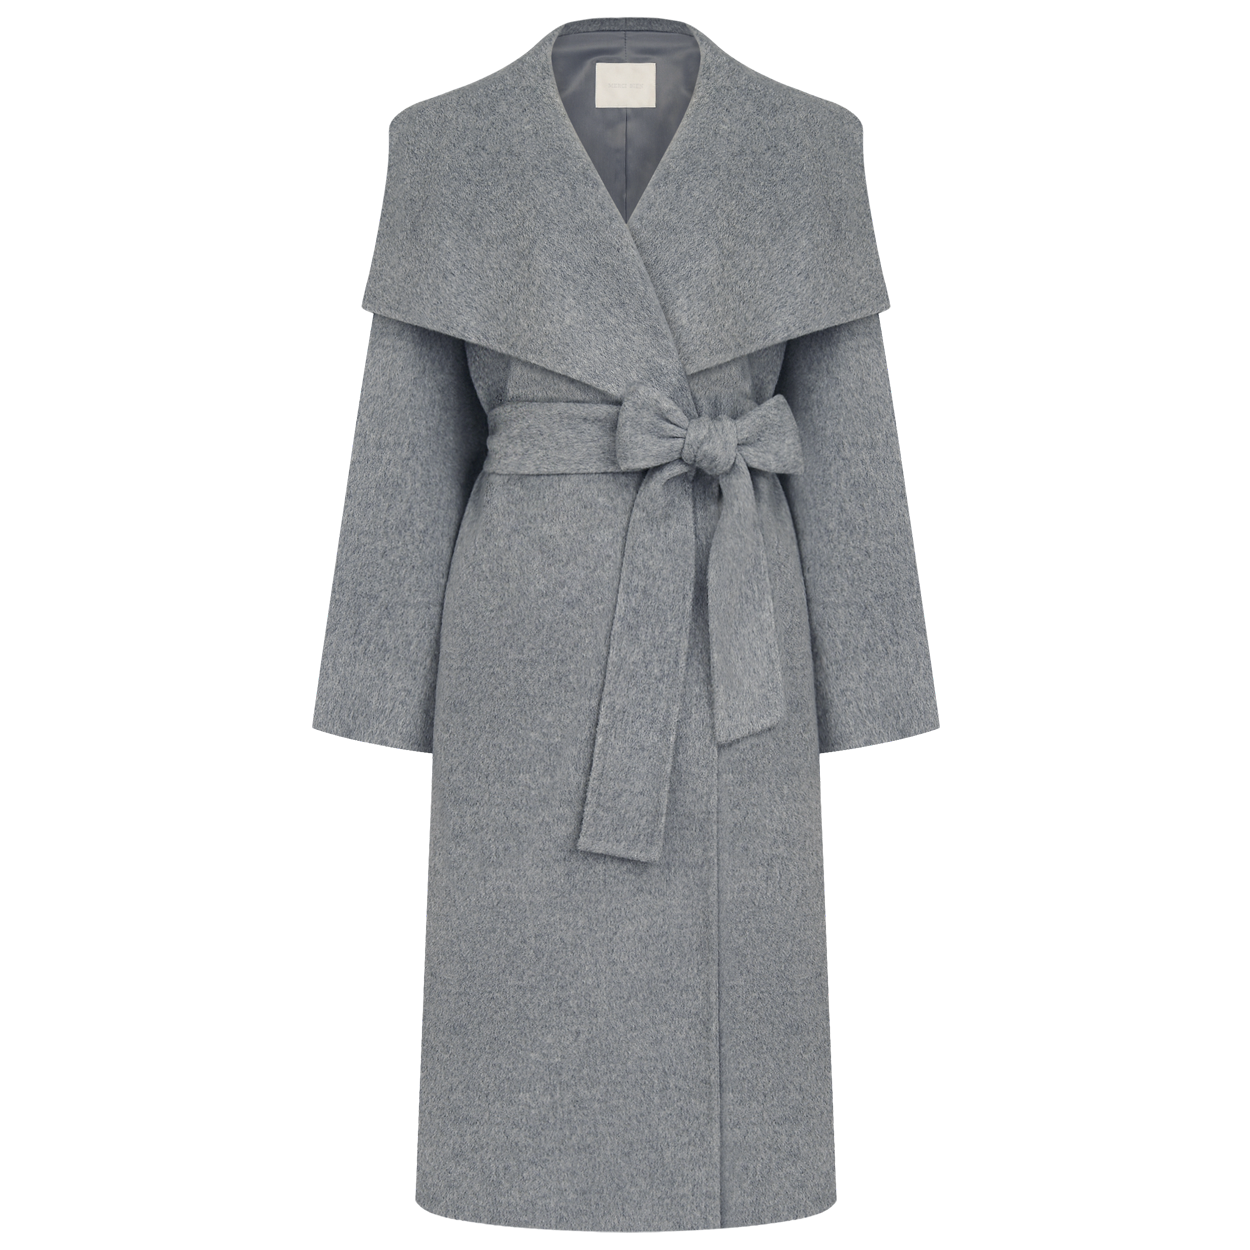 City coat (melange grey)